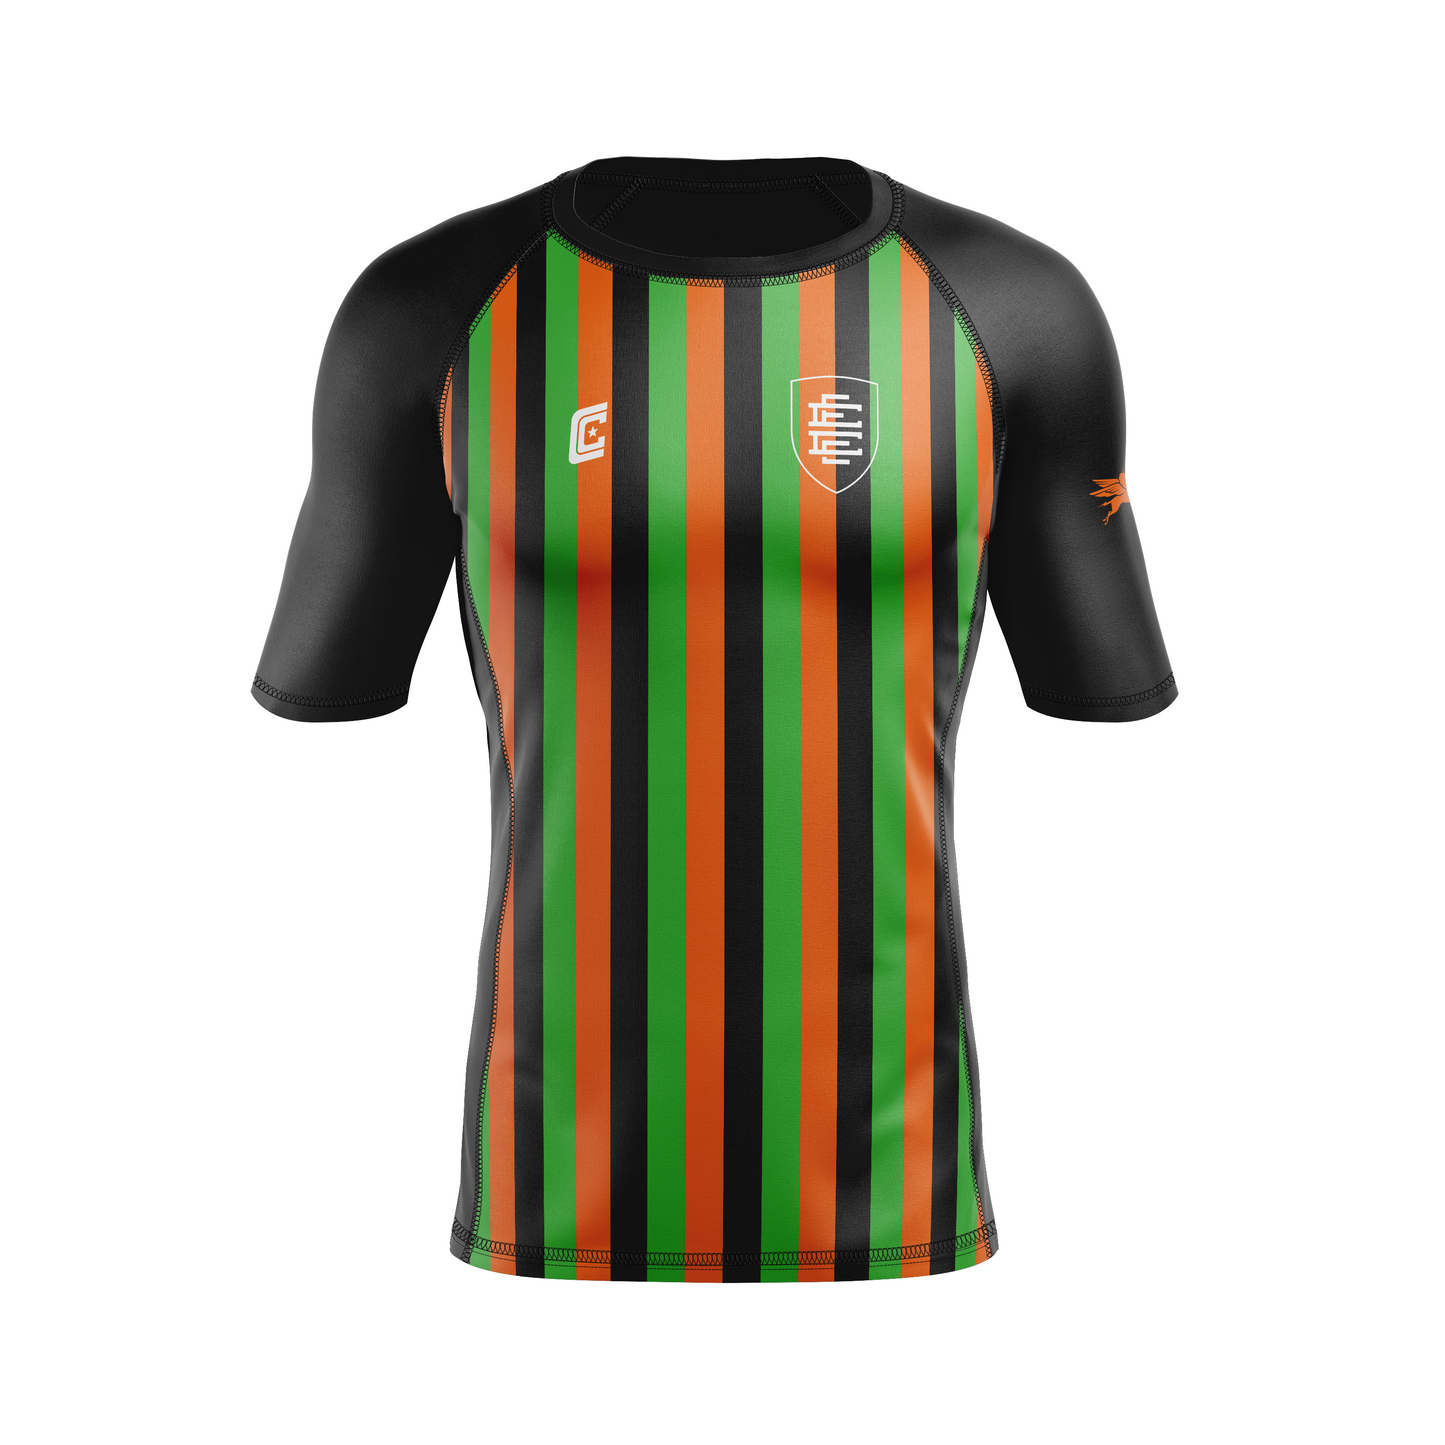 CCFC men's rash guard Golciaga United, black orange and green